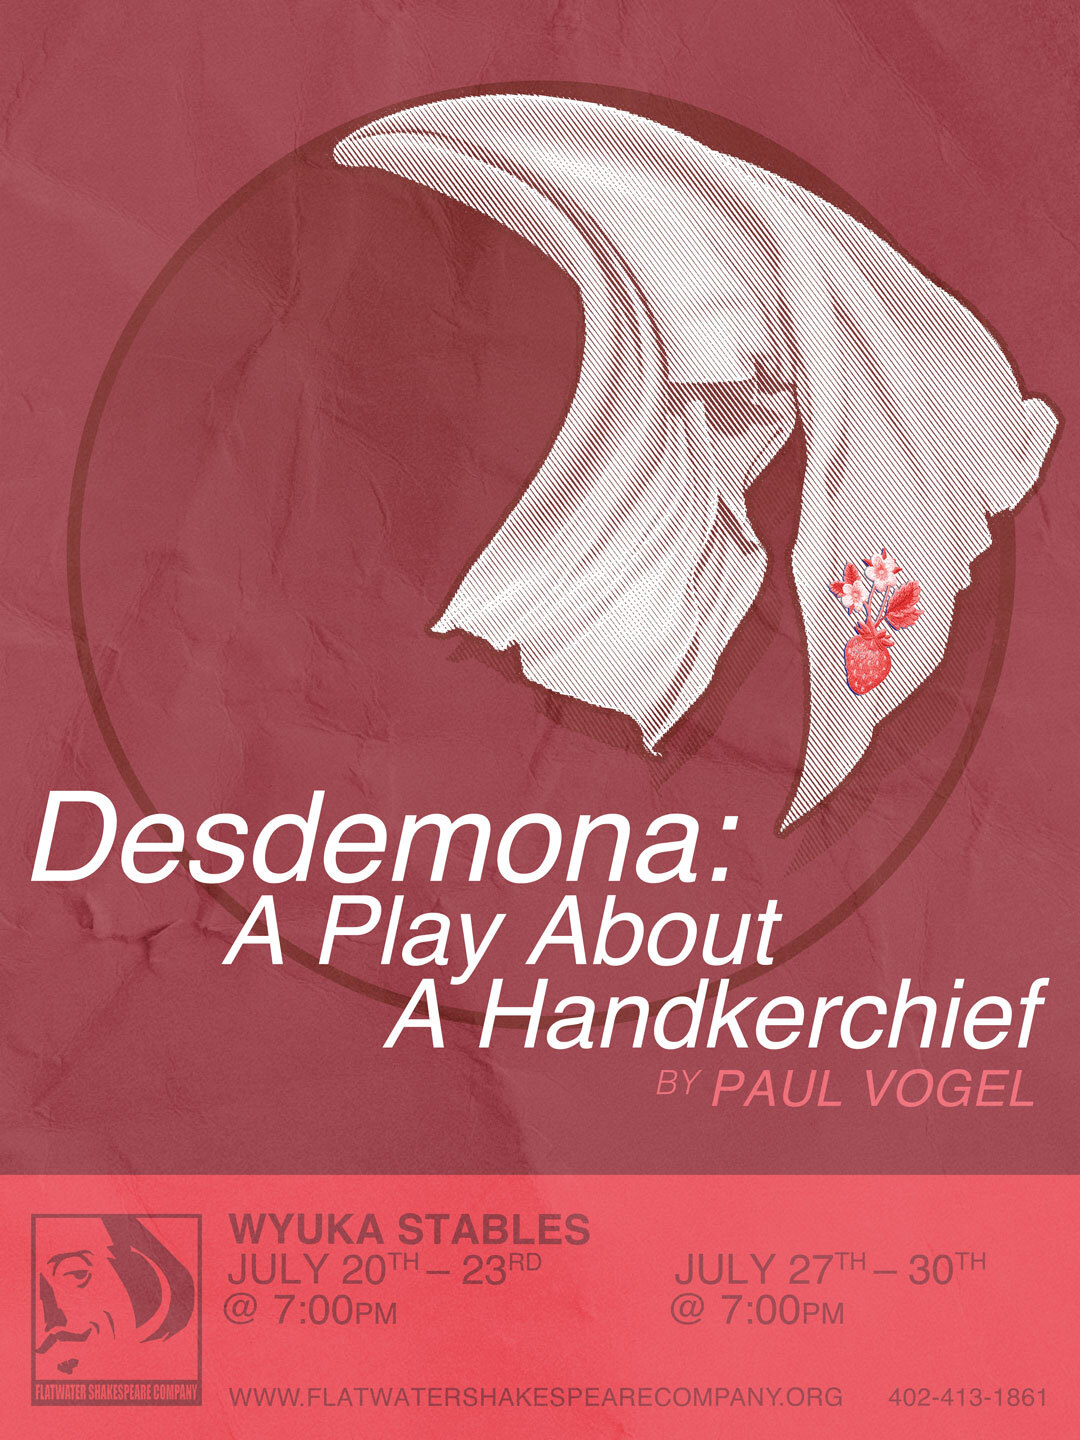 7/27 SEN - SENIOR (65+): Thurs. July 27, 2023 | 7:00 p.m. - 10:00 p.m. CST | Wyuka Stables (Desdemona: A Play about a Handkerchief)